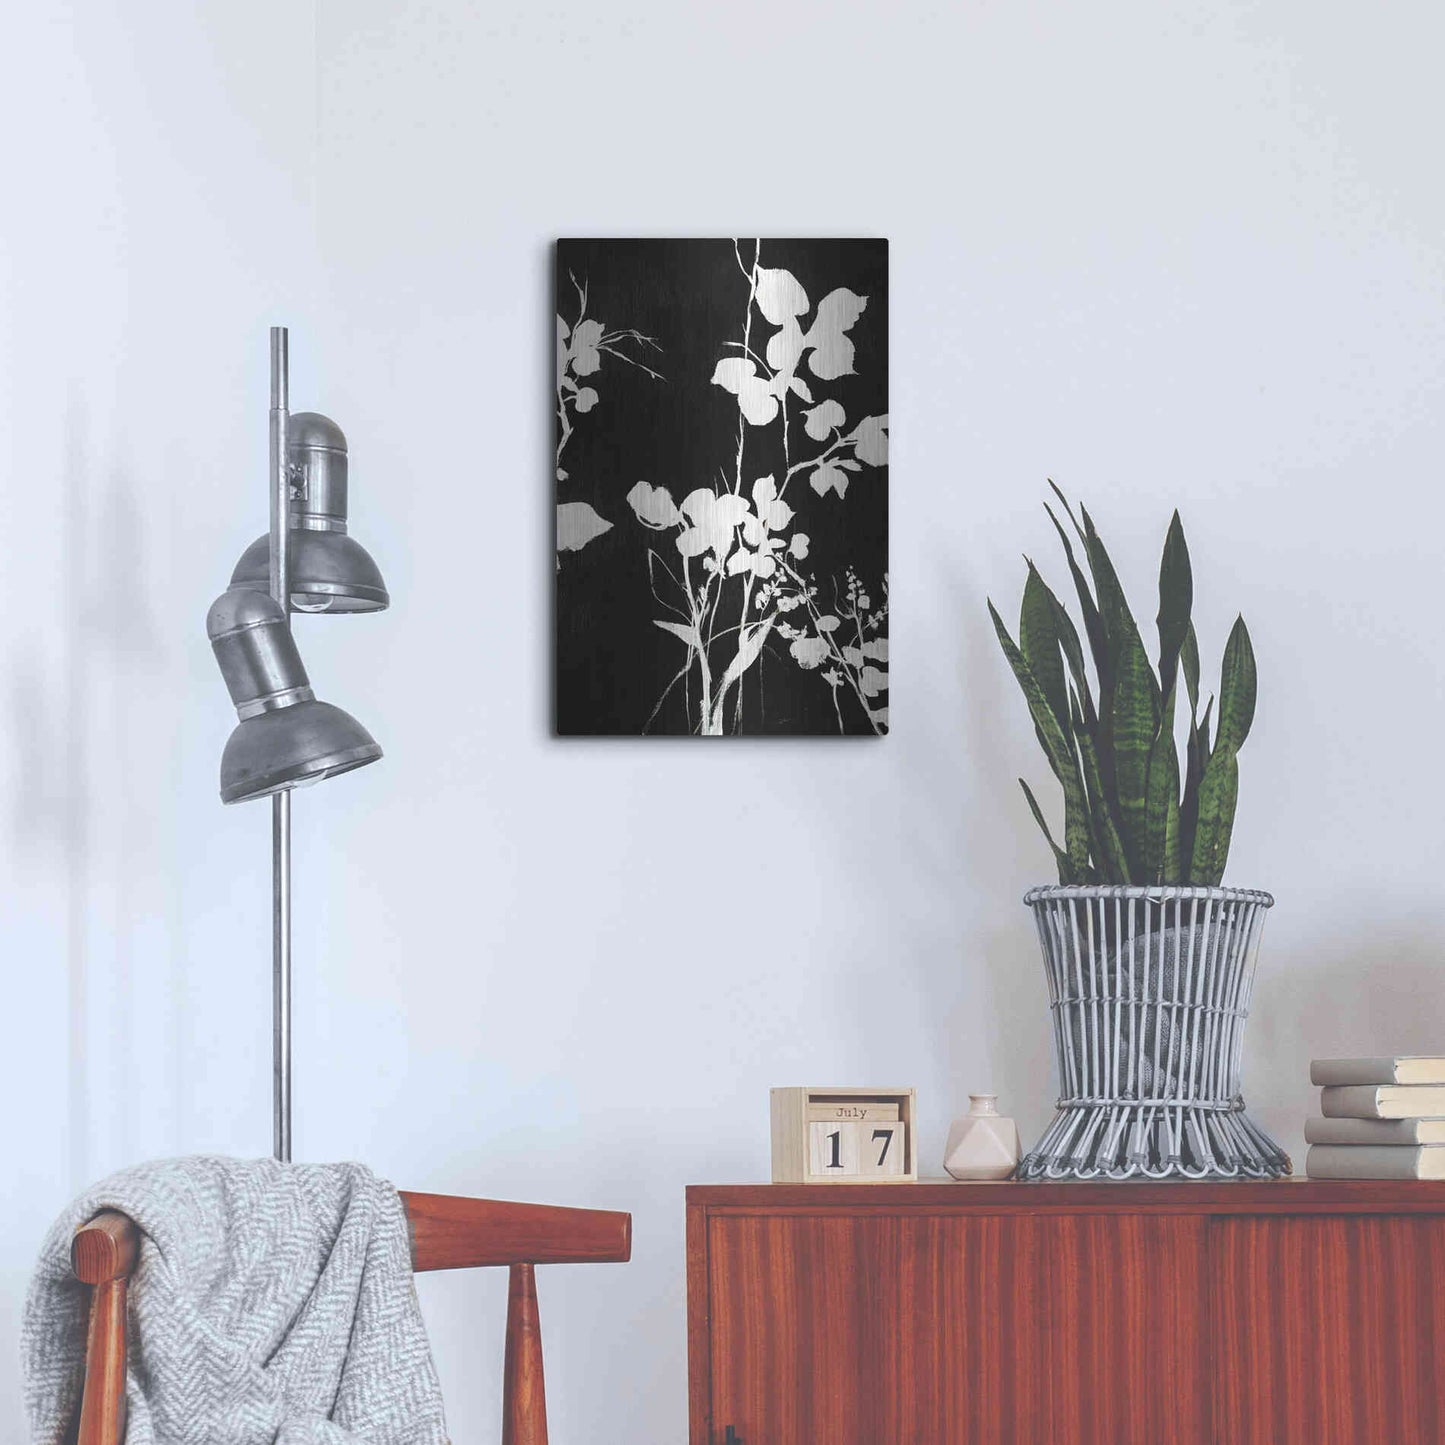 Luxe Metal Art 'Silhouette Leaves 1' by Design Fabrikken, Metal Wall Art,16x24